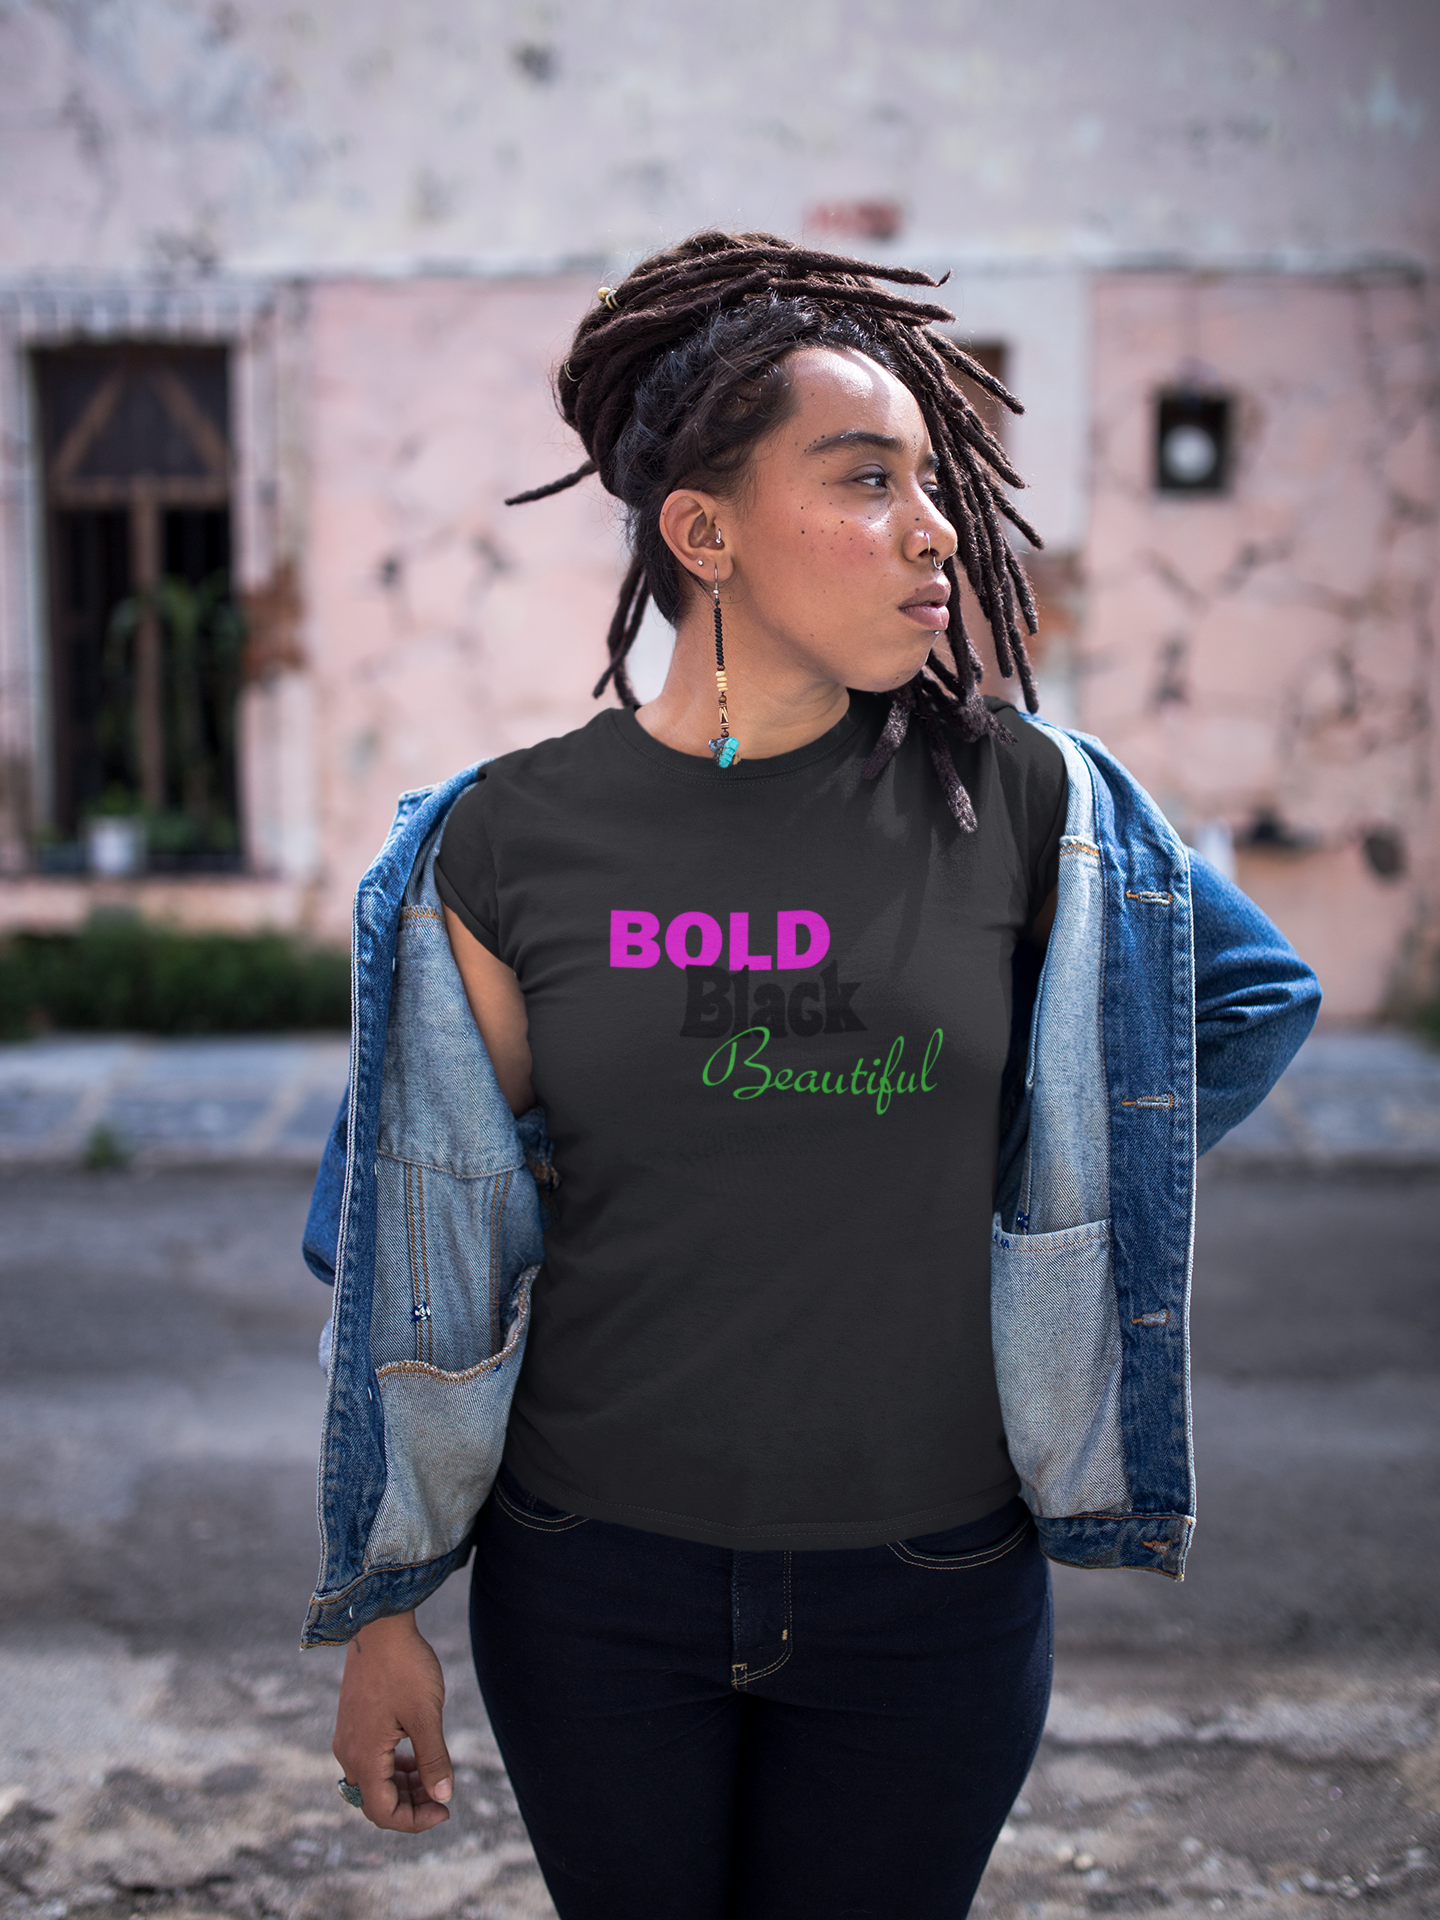 Bold Black Beautiful Women's short sleeve t-shirt